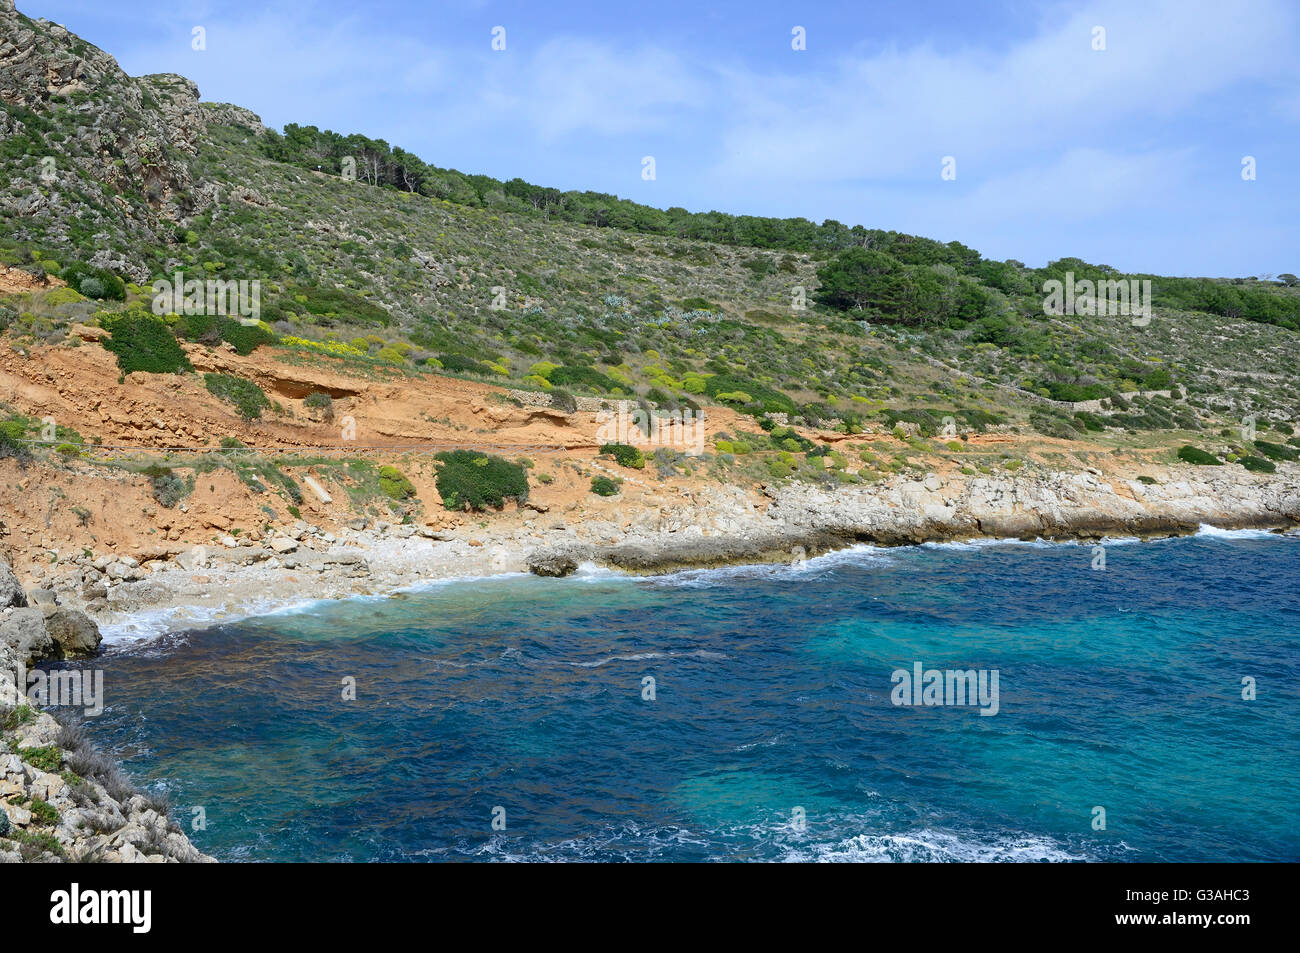 Impression of Levanzo (island),Cala Fredda, Aegadian Islands, Italy, Europe Stock Photo